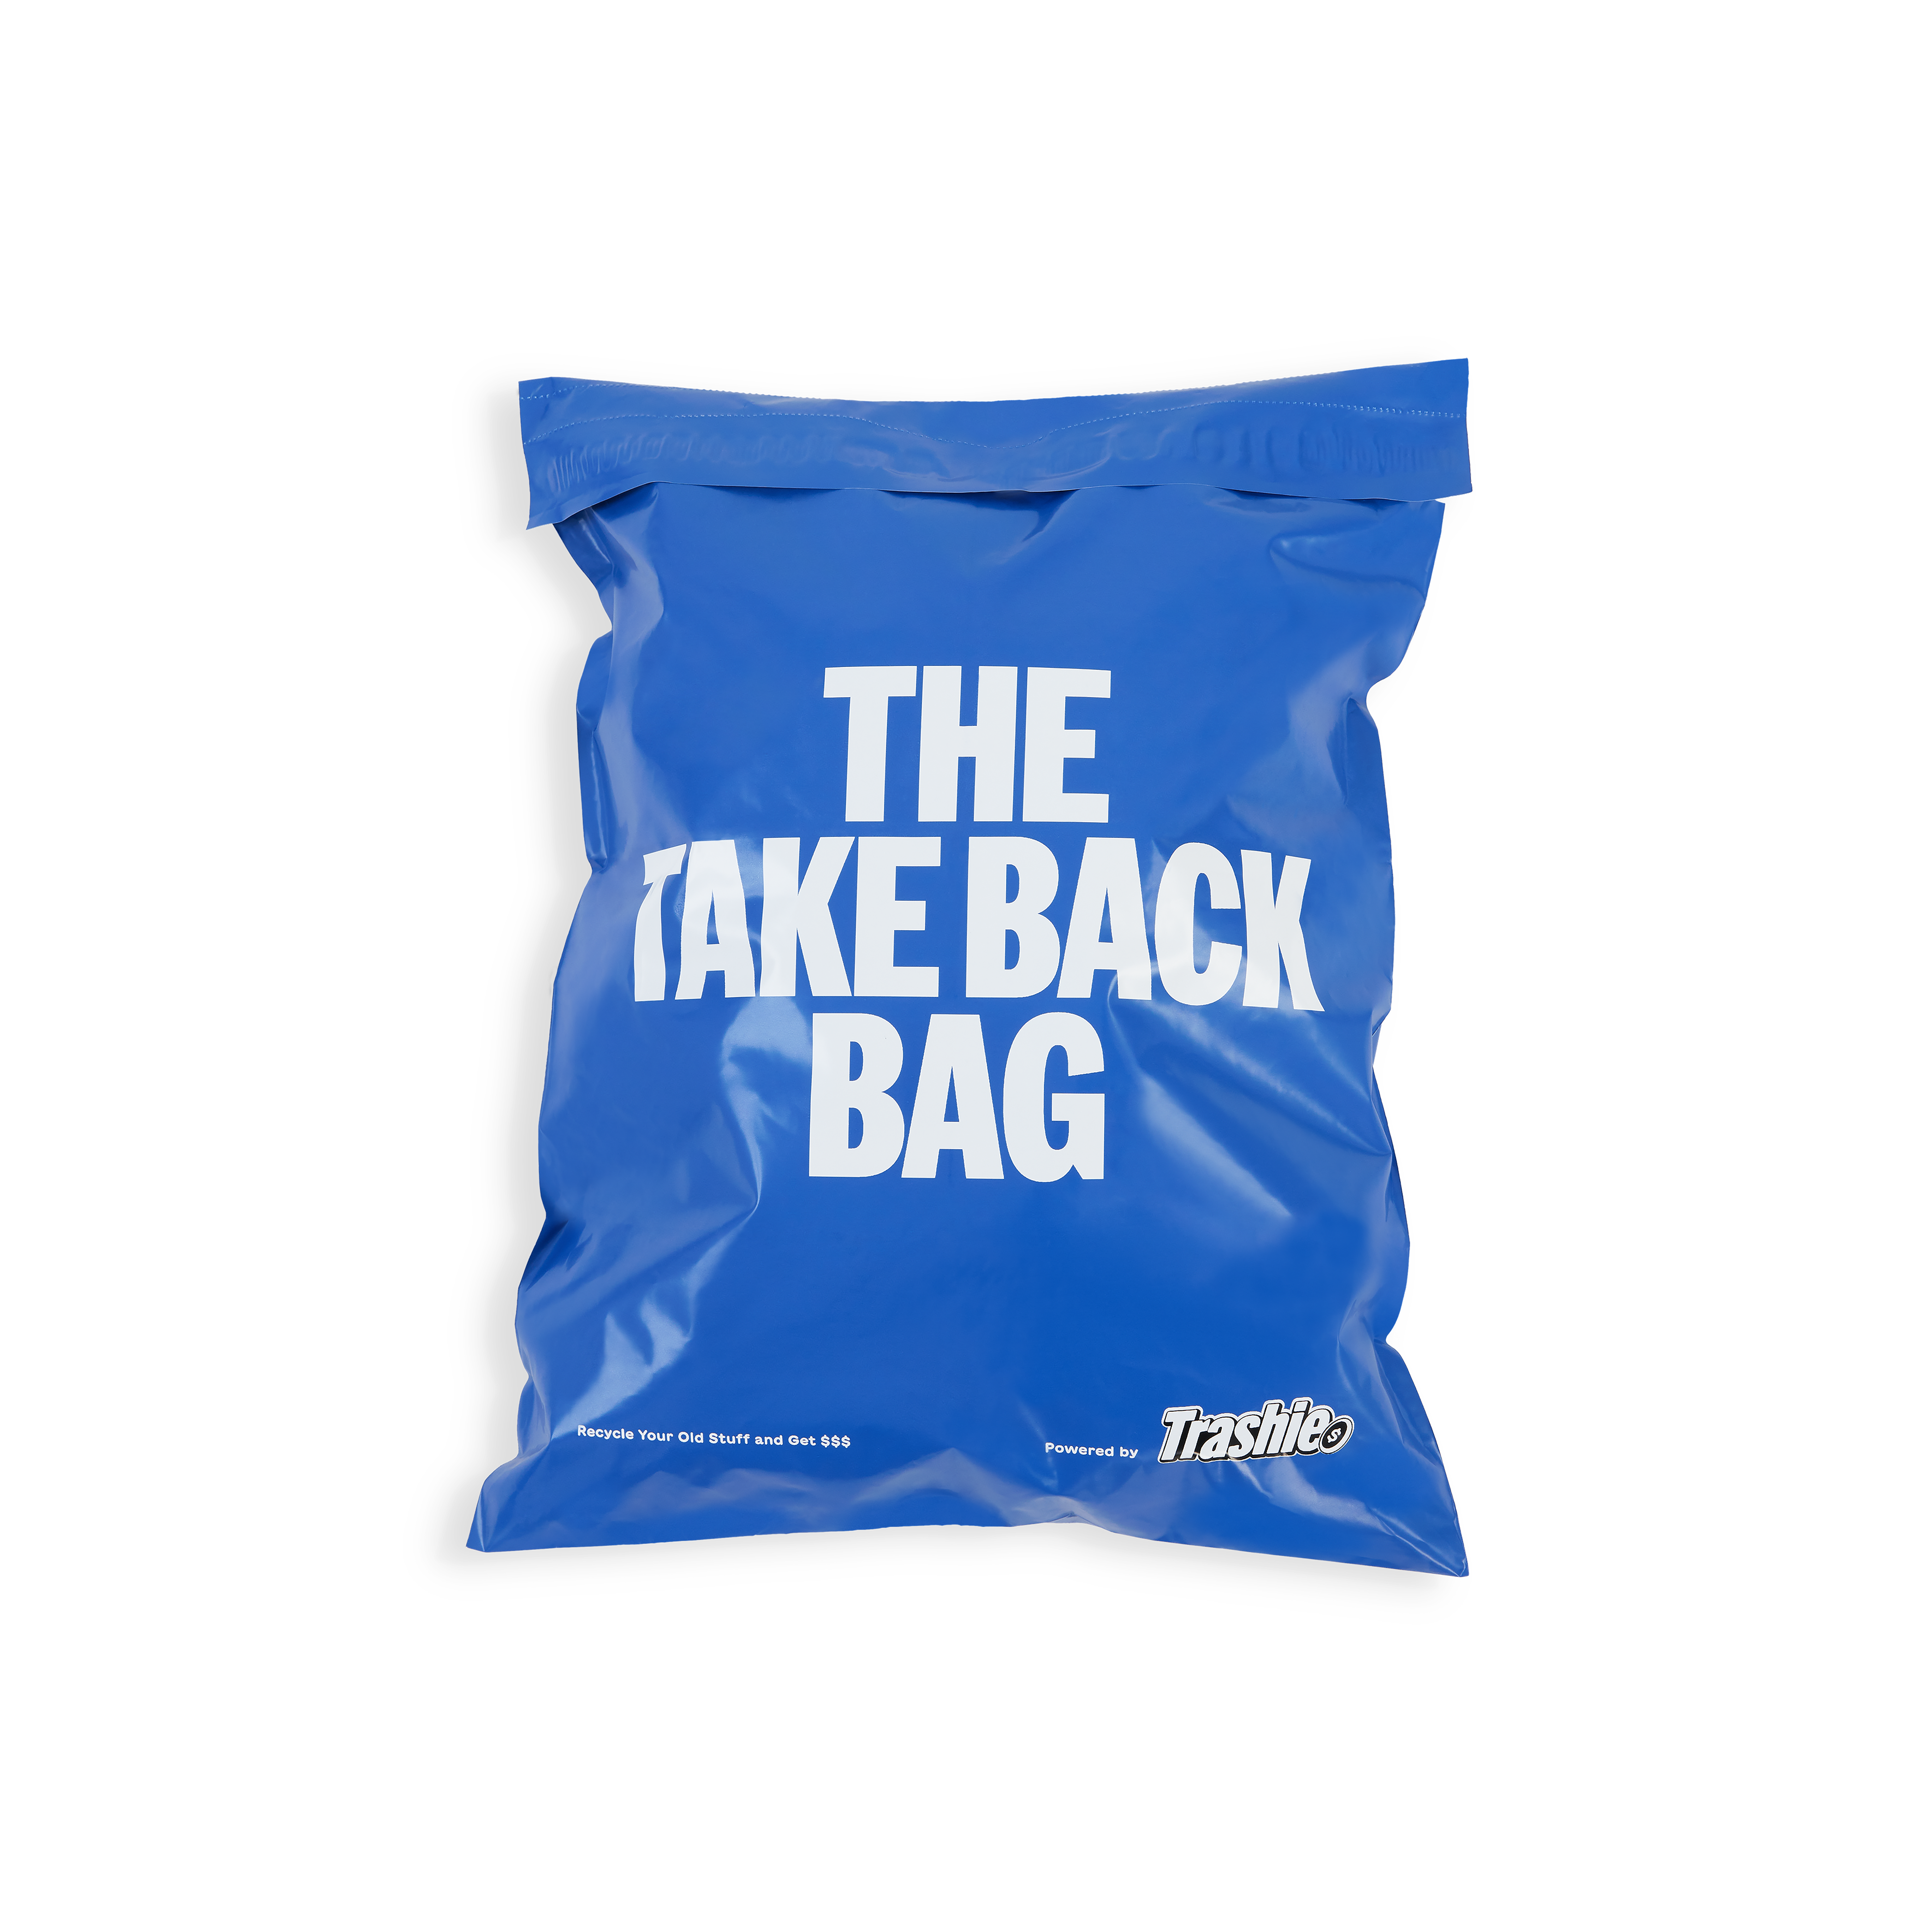 Trashie  The Take Back Bag